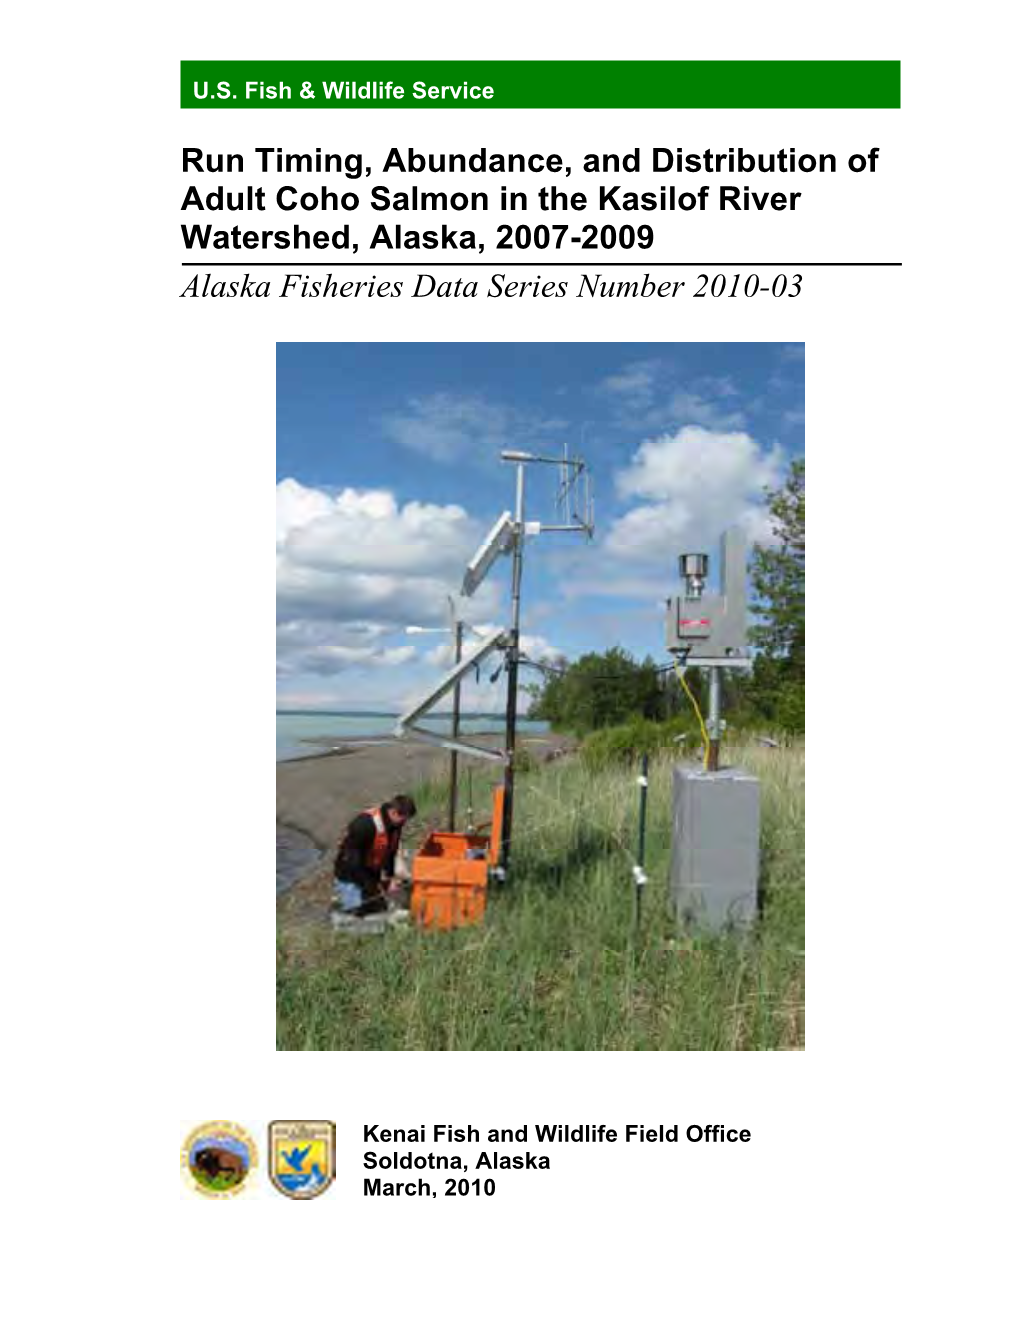 Run Timing, Abundance, and Distribution of Adult Coho Salmon in the Kasilof River Watershed, Alaska, 2007-2009 Alaska Fisheries Data Series Number 2010-03